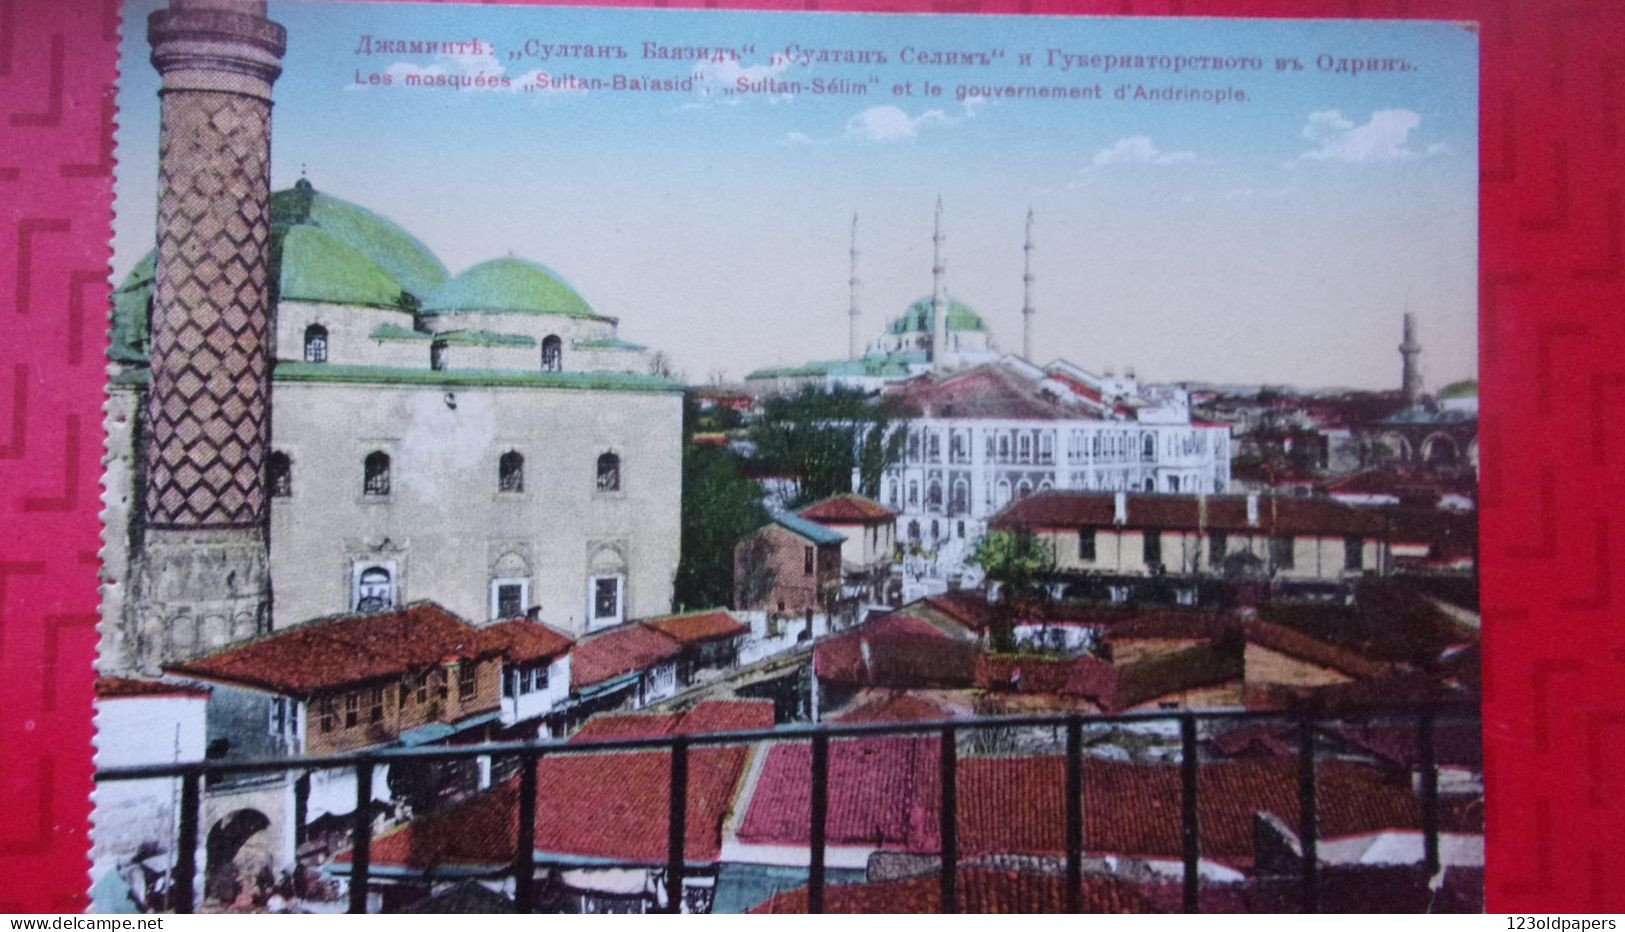 TURQUIE PROCHE BULGARIE Edirne, Ou Andrinople VUE 1919 TURKEY  MOSQUEES SULTAN BAIASID SULTAN SELIM GOUVERNEMENT - Turkey